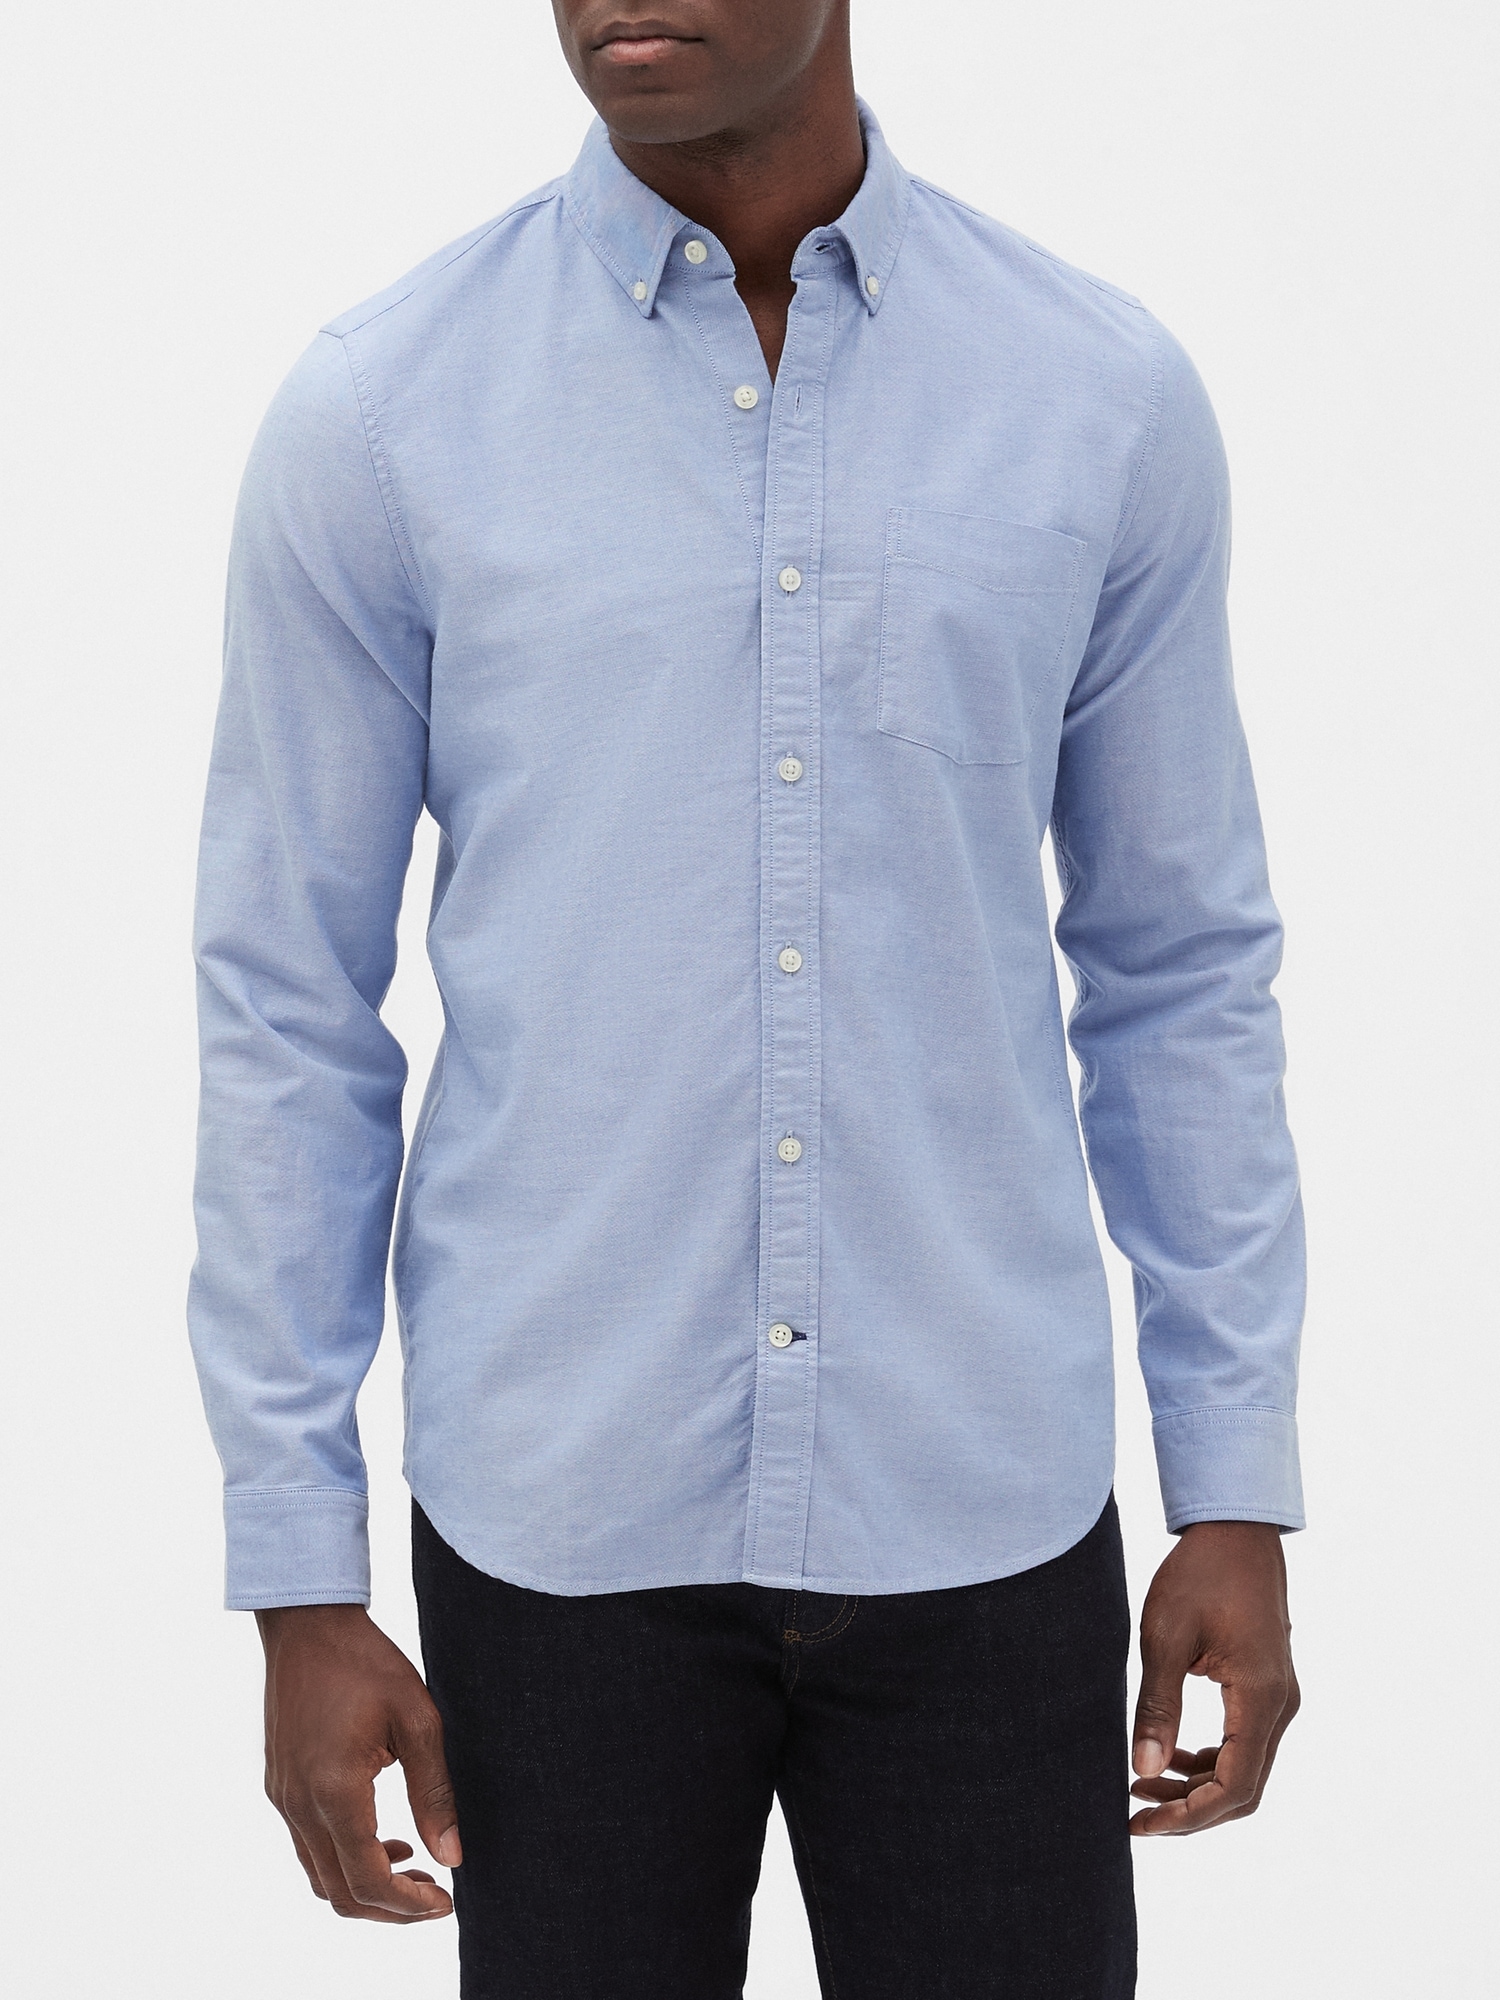 Oxford Shirt in Slim Fit | Gap Factory